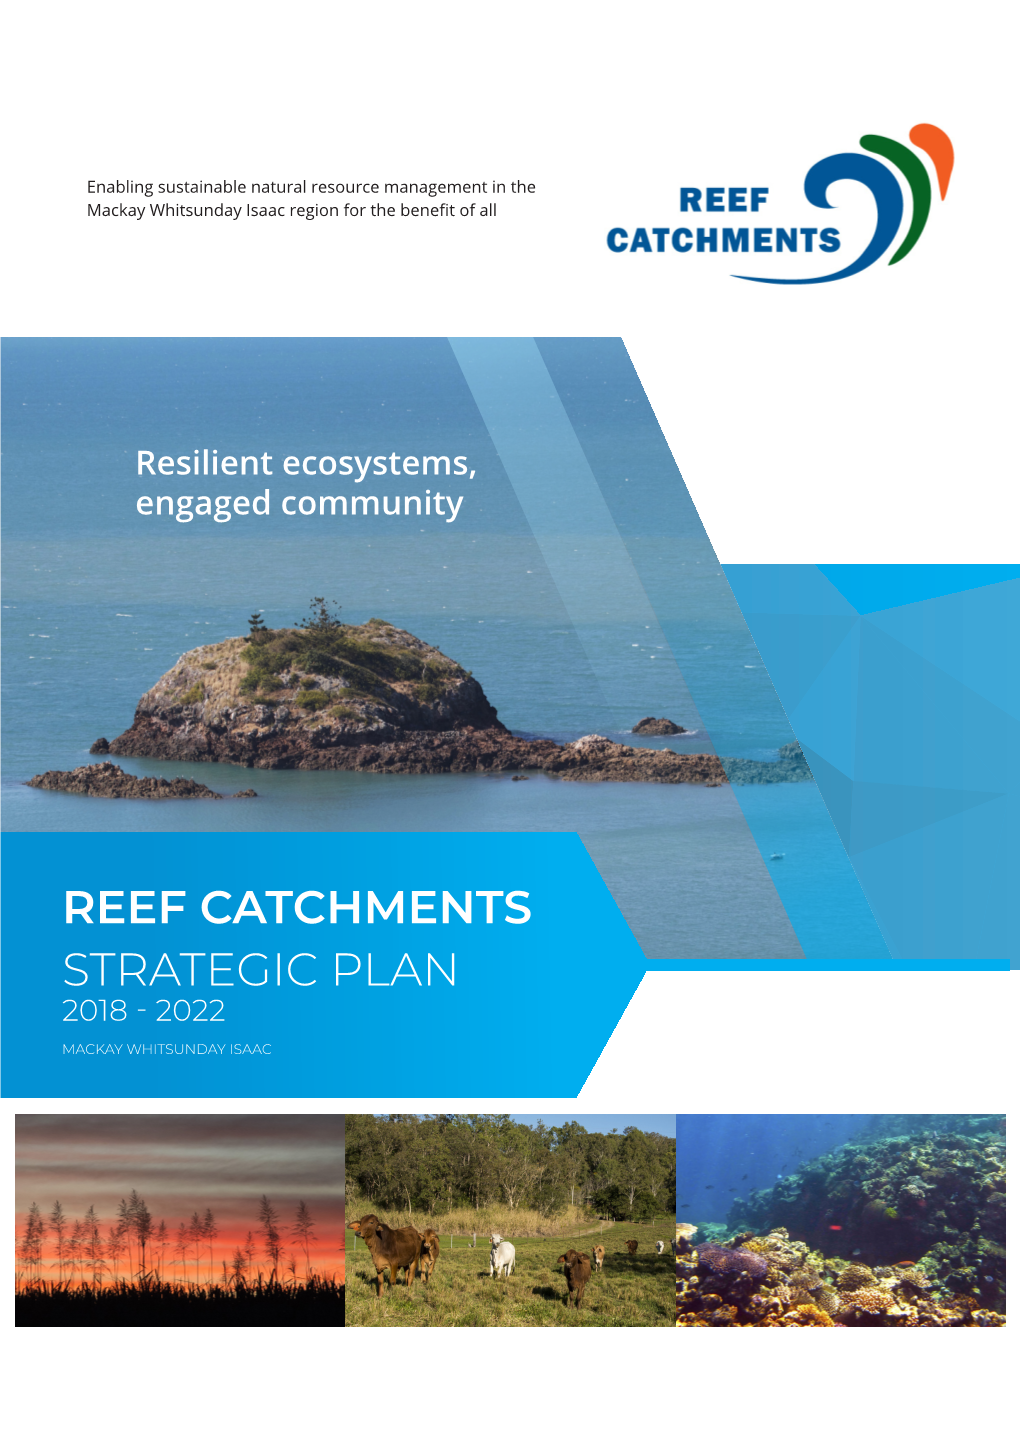 Reef Catchments Strategic Plan 2018 - 2022